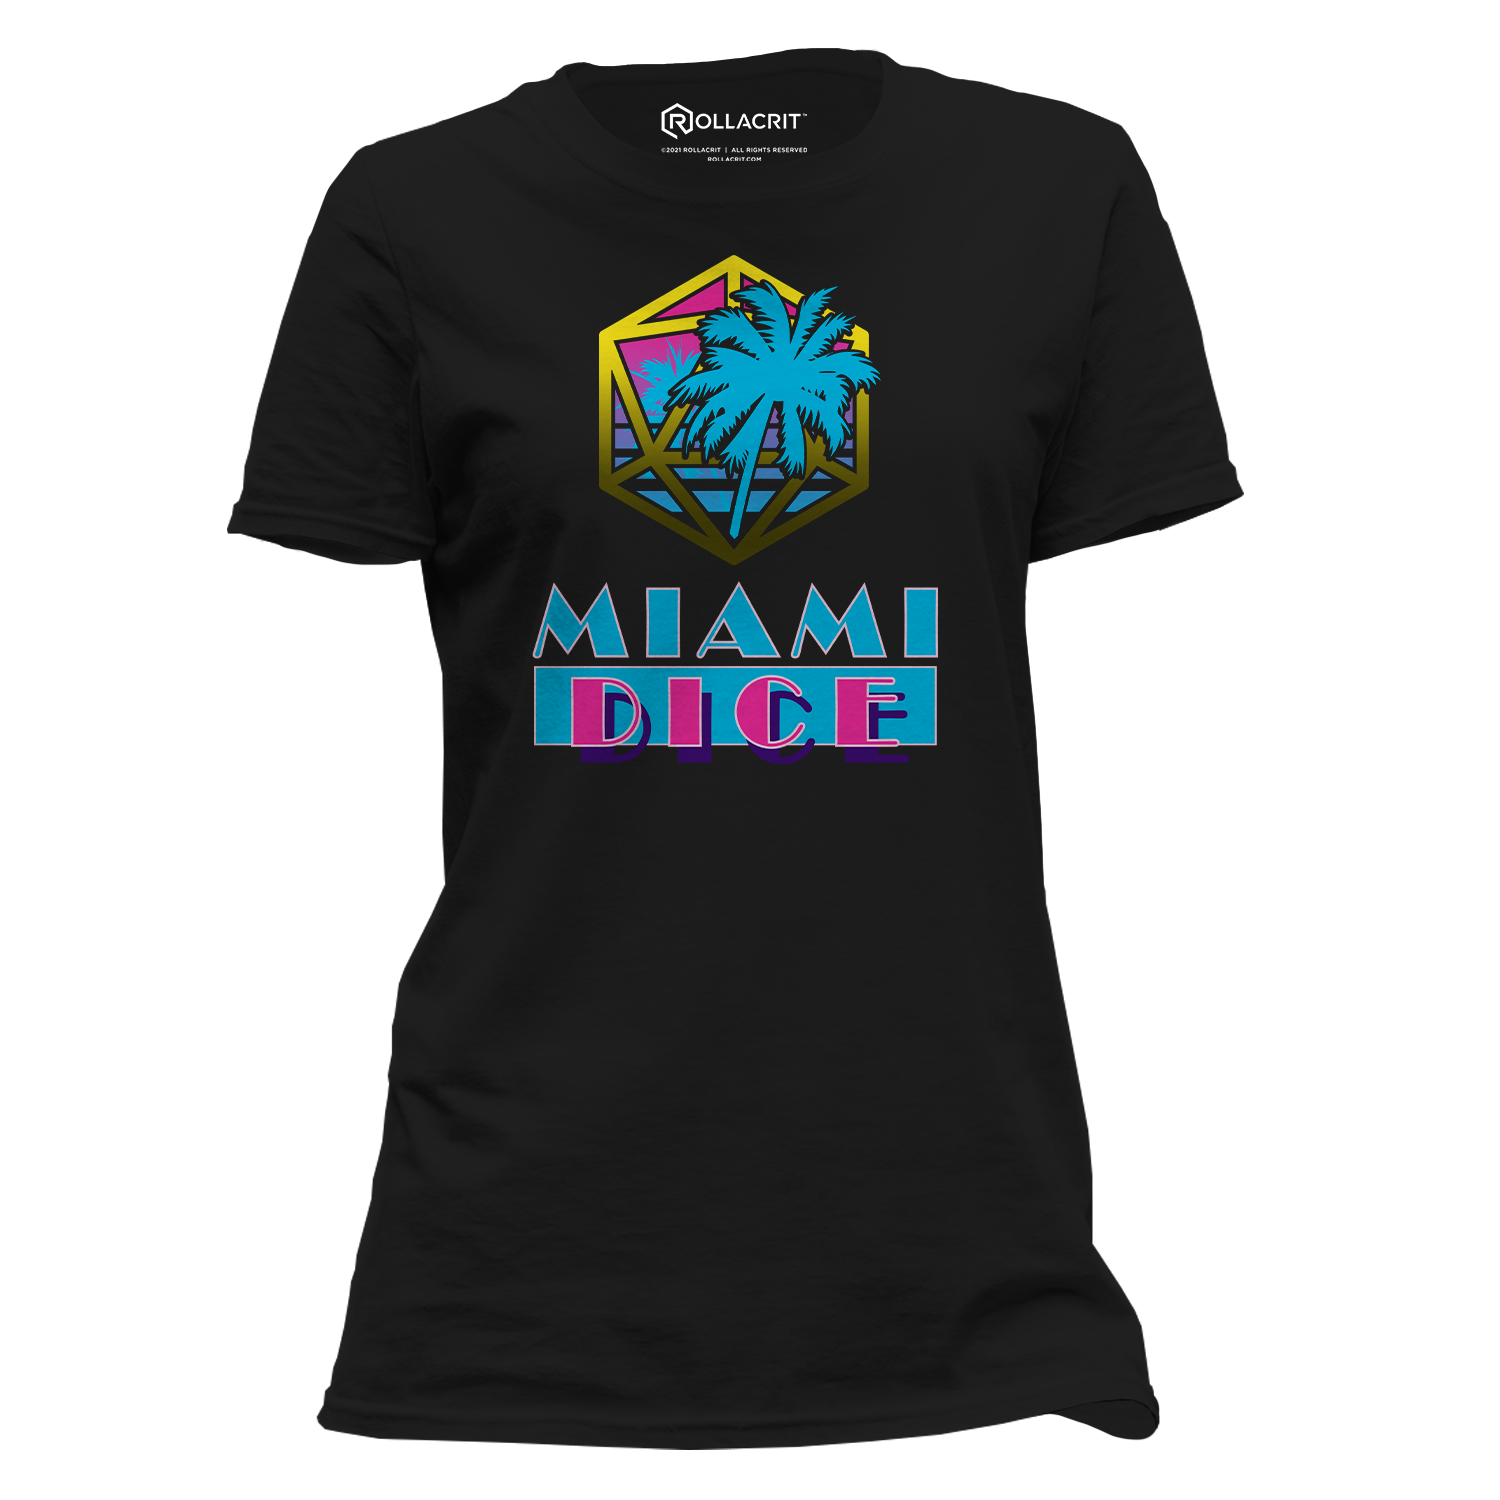 Miami Dice Femme T-Shirt | Rollacrit